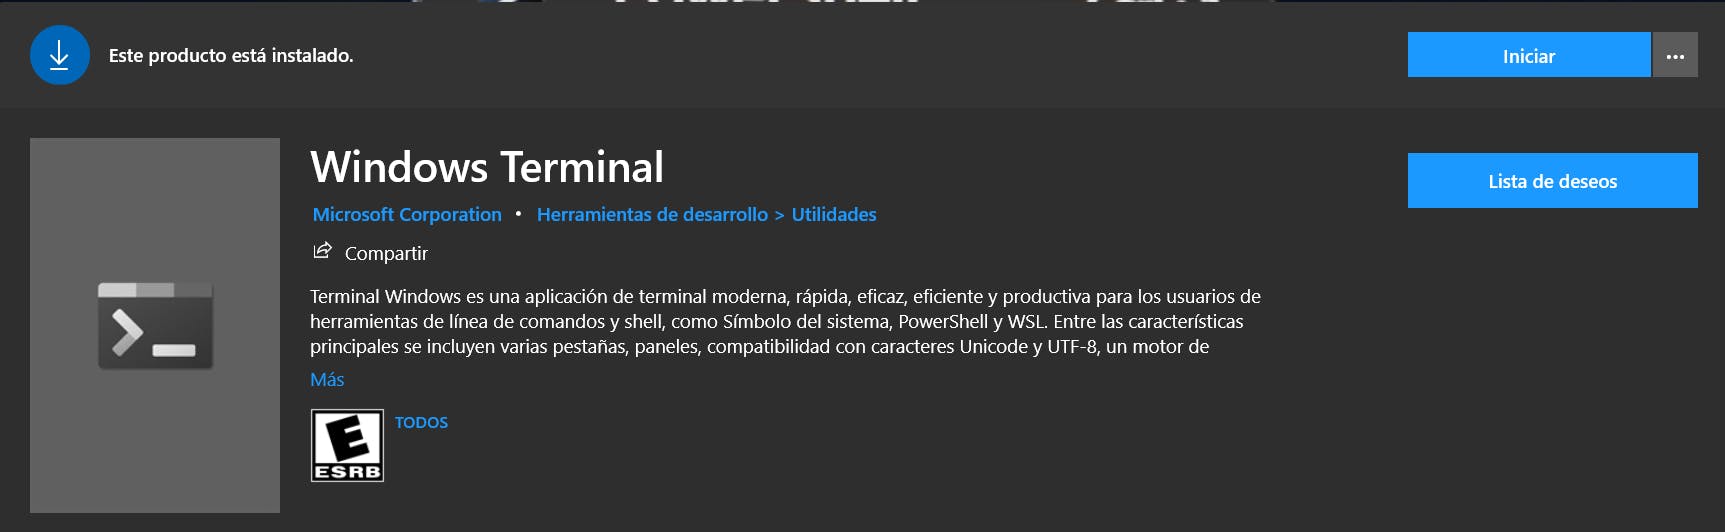 Windows-terminal.png